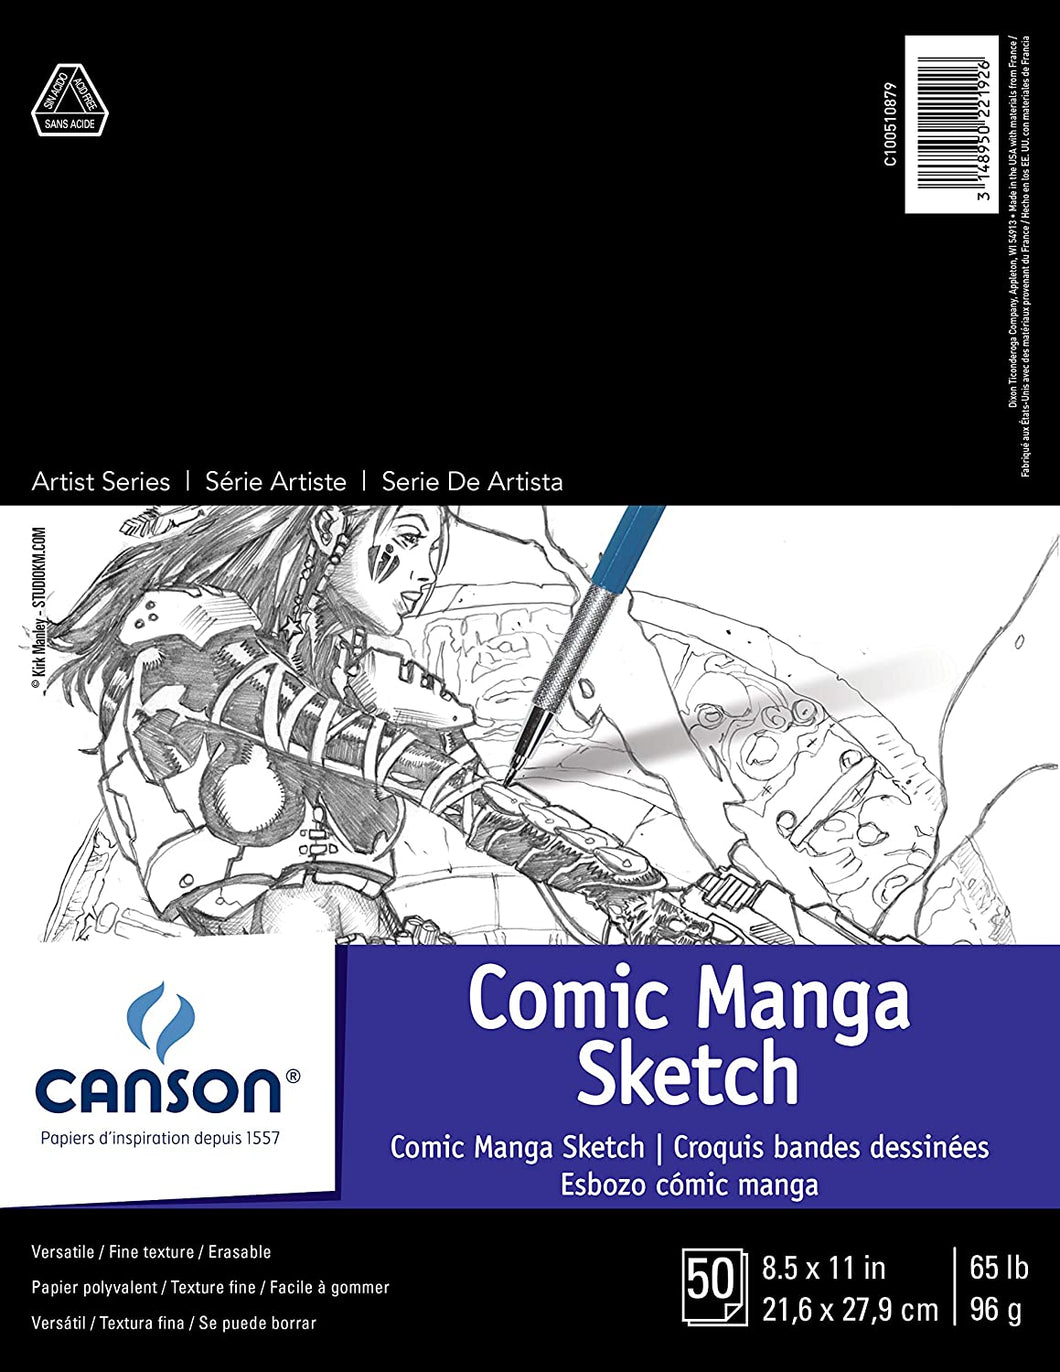 Canson - Comic Manga Sketch Pad